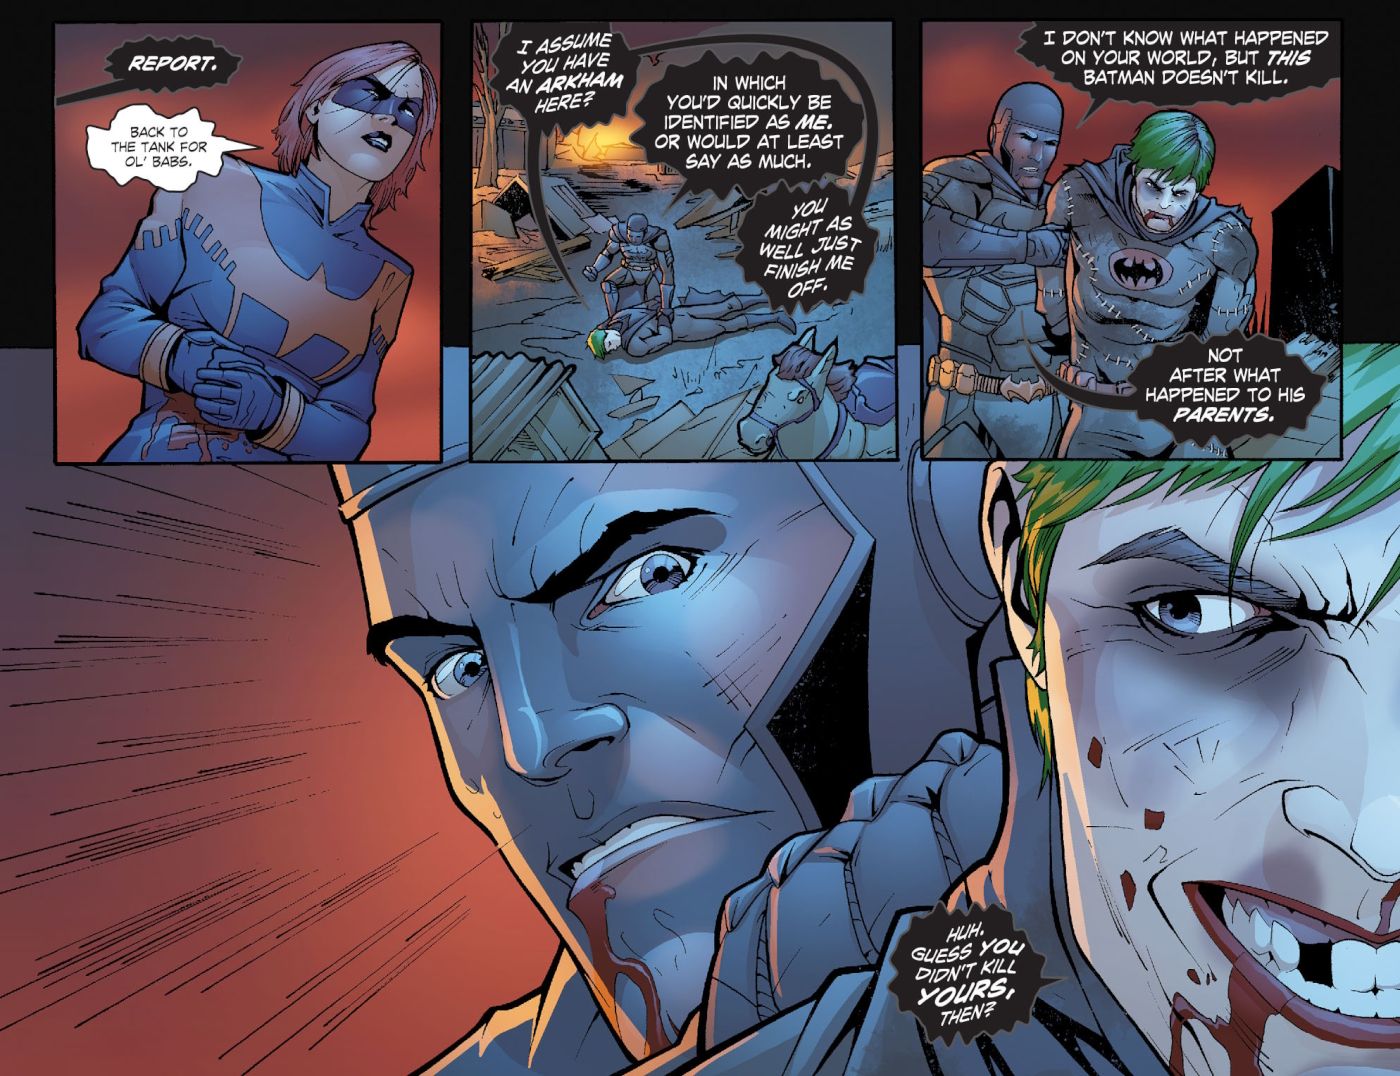 Smallville: Alien #11, the Jokerized Batman variant admits he killed his own parents